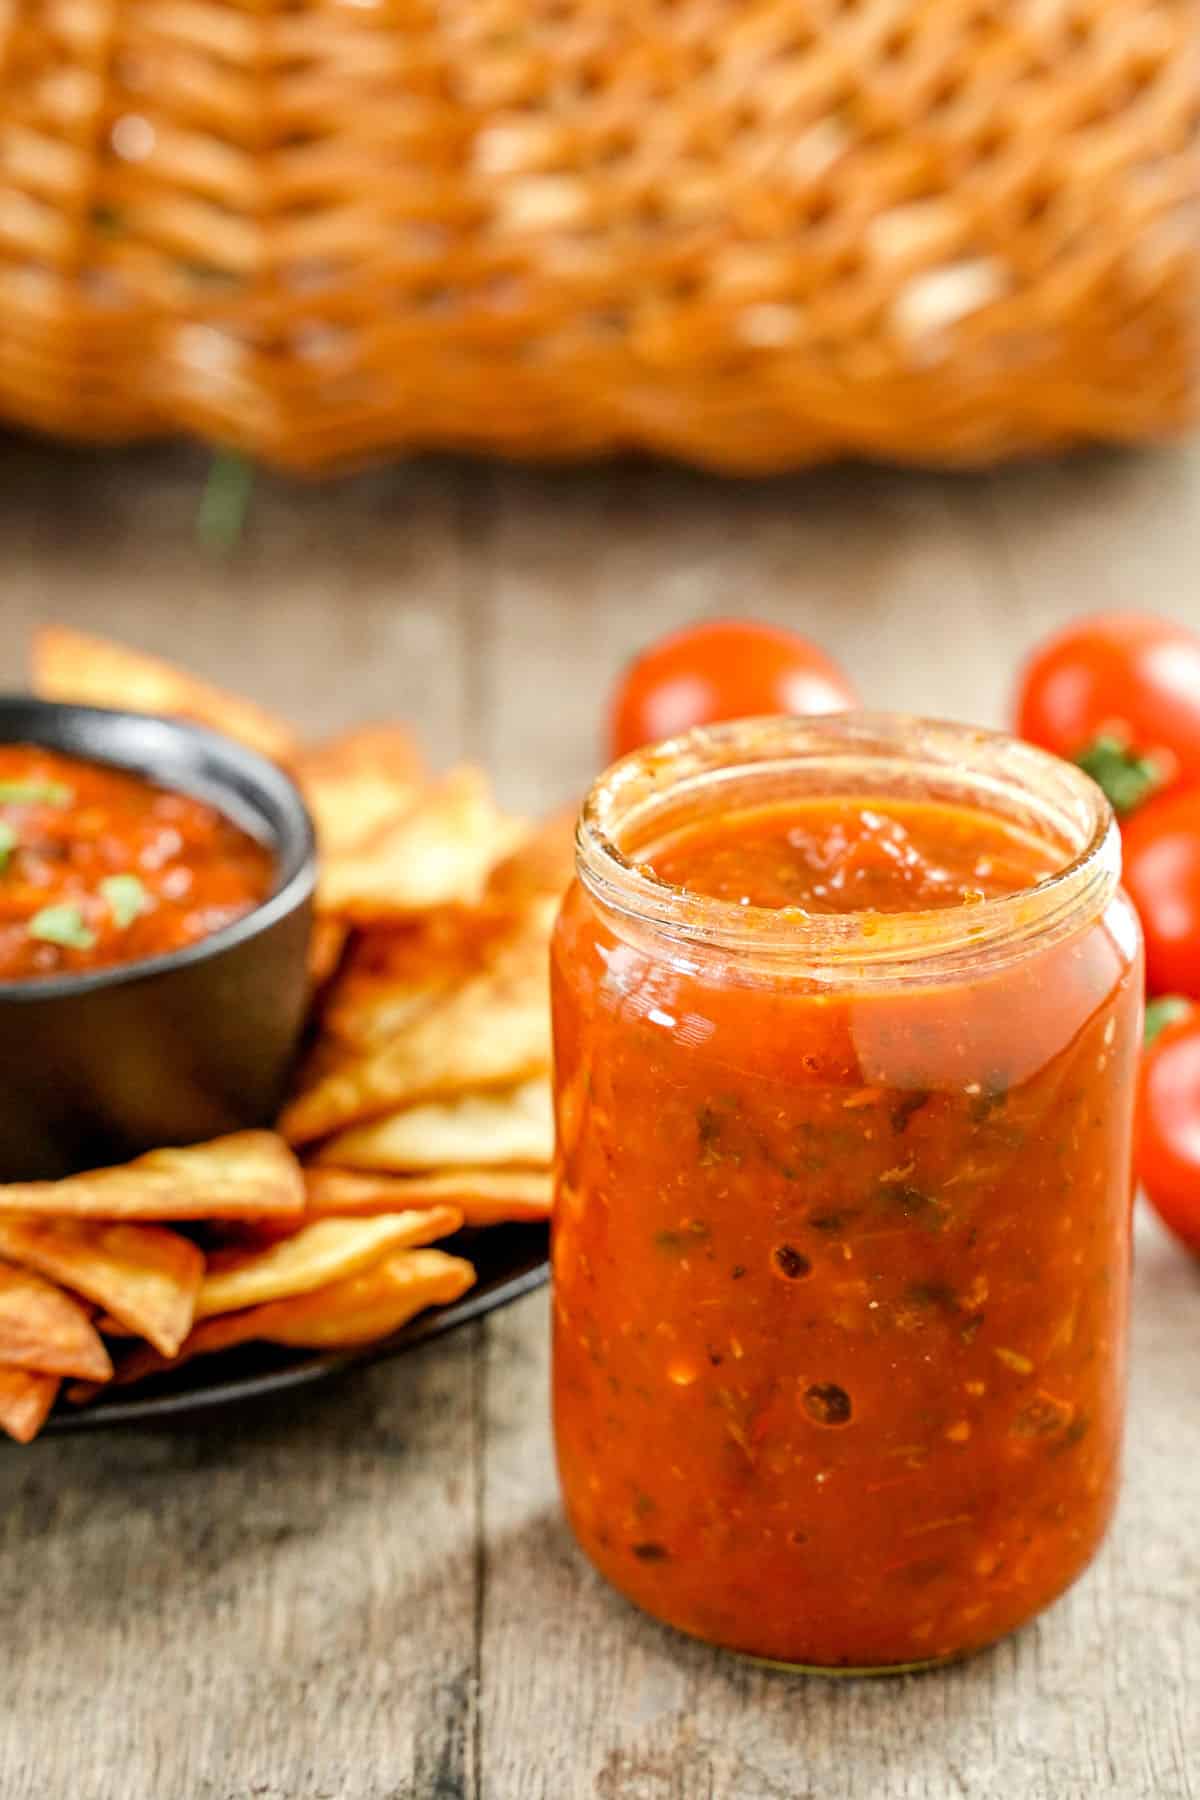 Canned jar of salsa